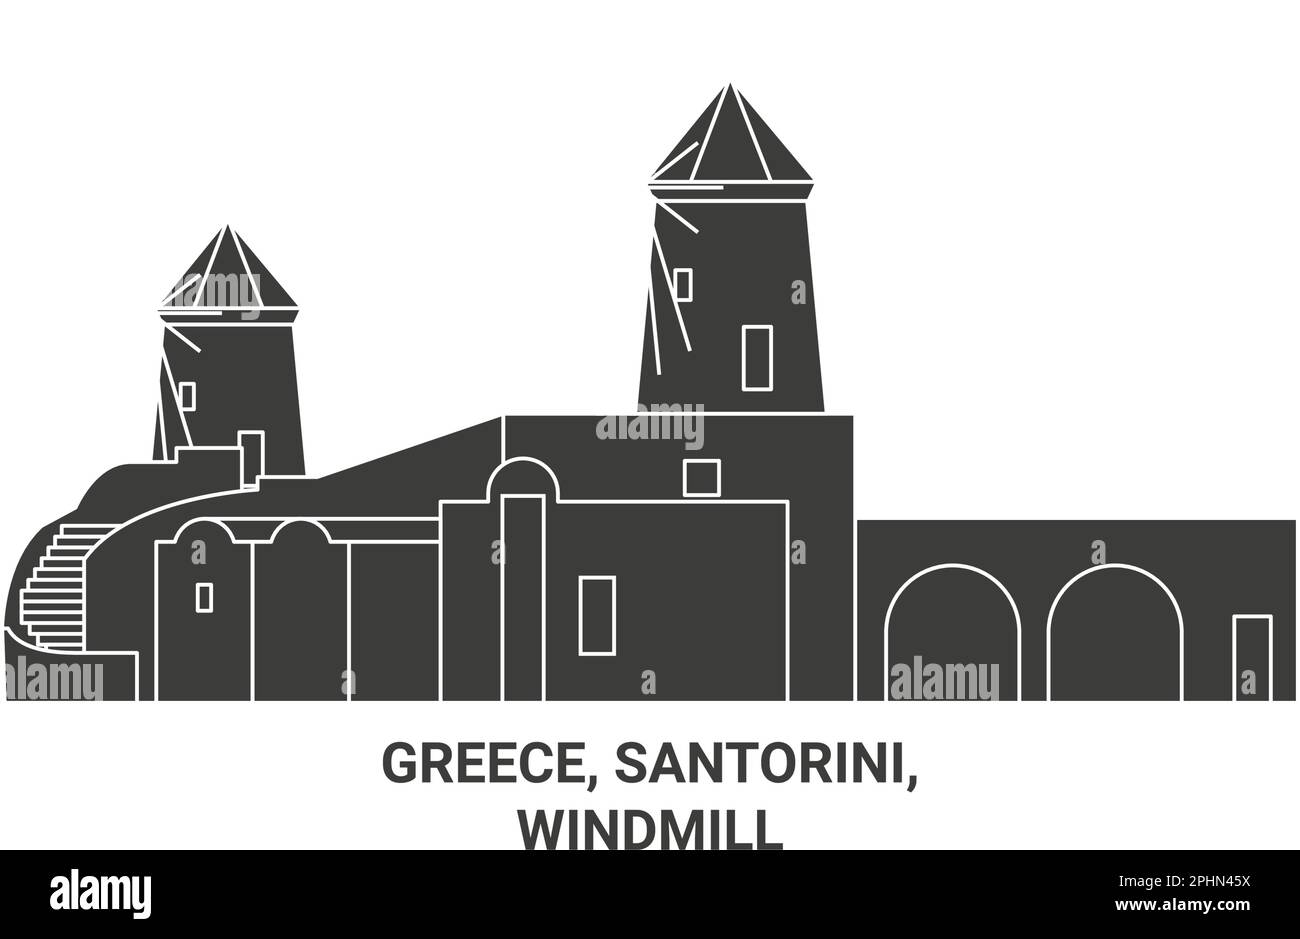 Greece, Santorini, Windmill travel landmark vector illustration Stock Vector